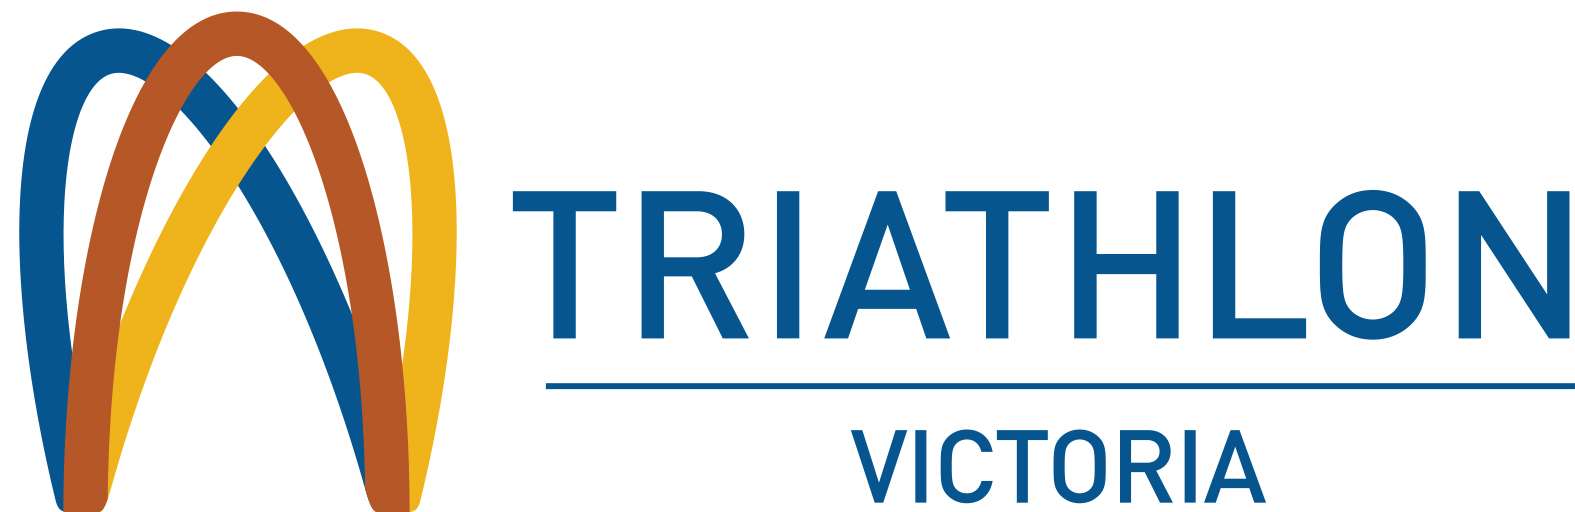 Triathlon VIC horizontal logo